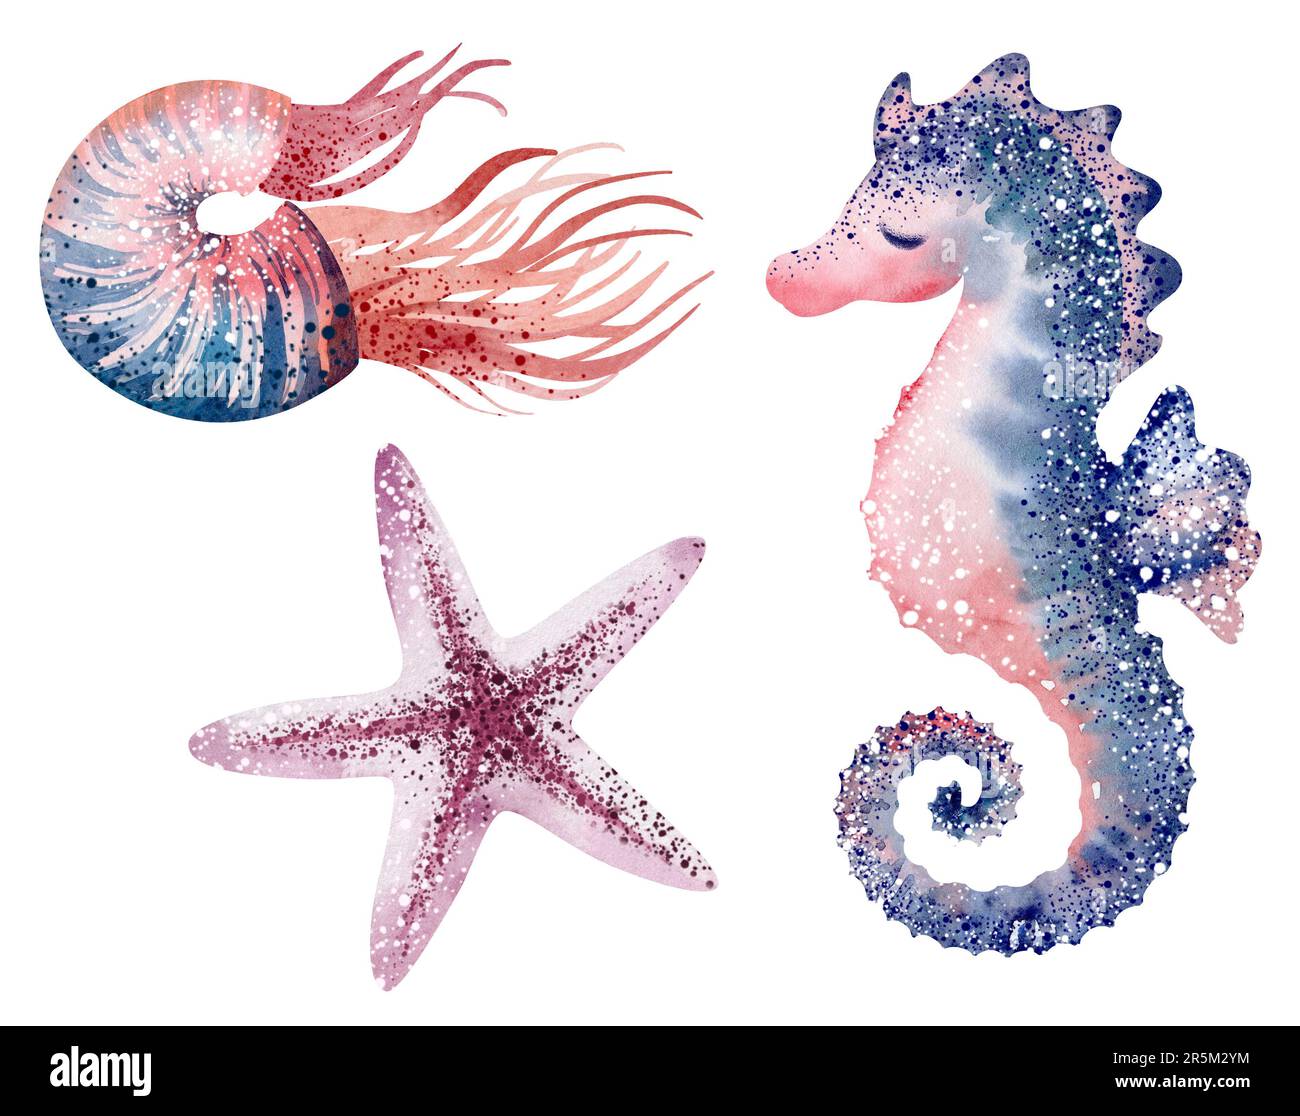 Watercolor illustrations of underwater marine animals octopus, seahorse, crab, starfish, jellyfish. Marine inhabitants of the underwater world. Stock Photo